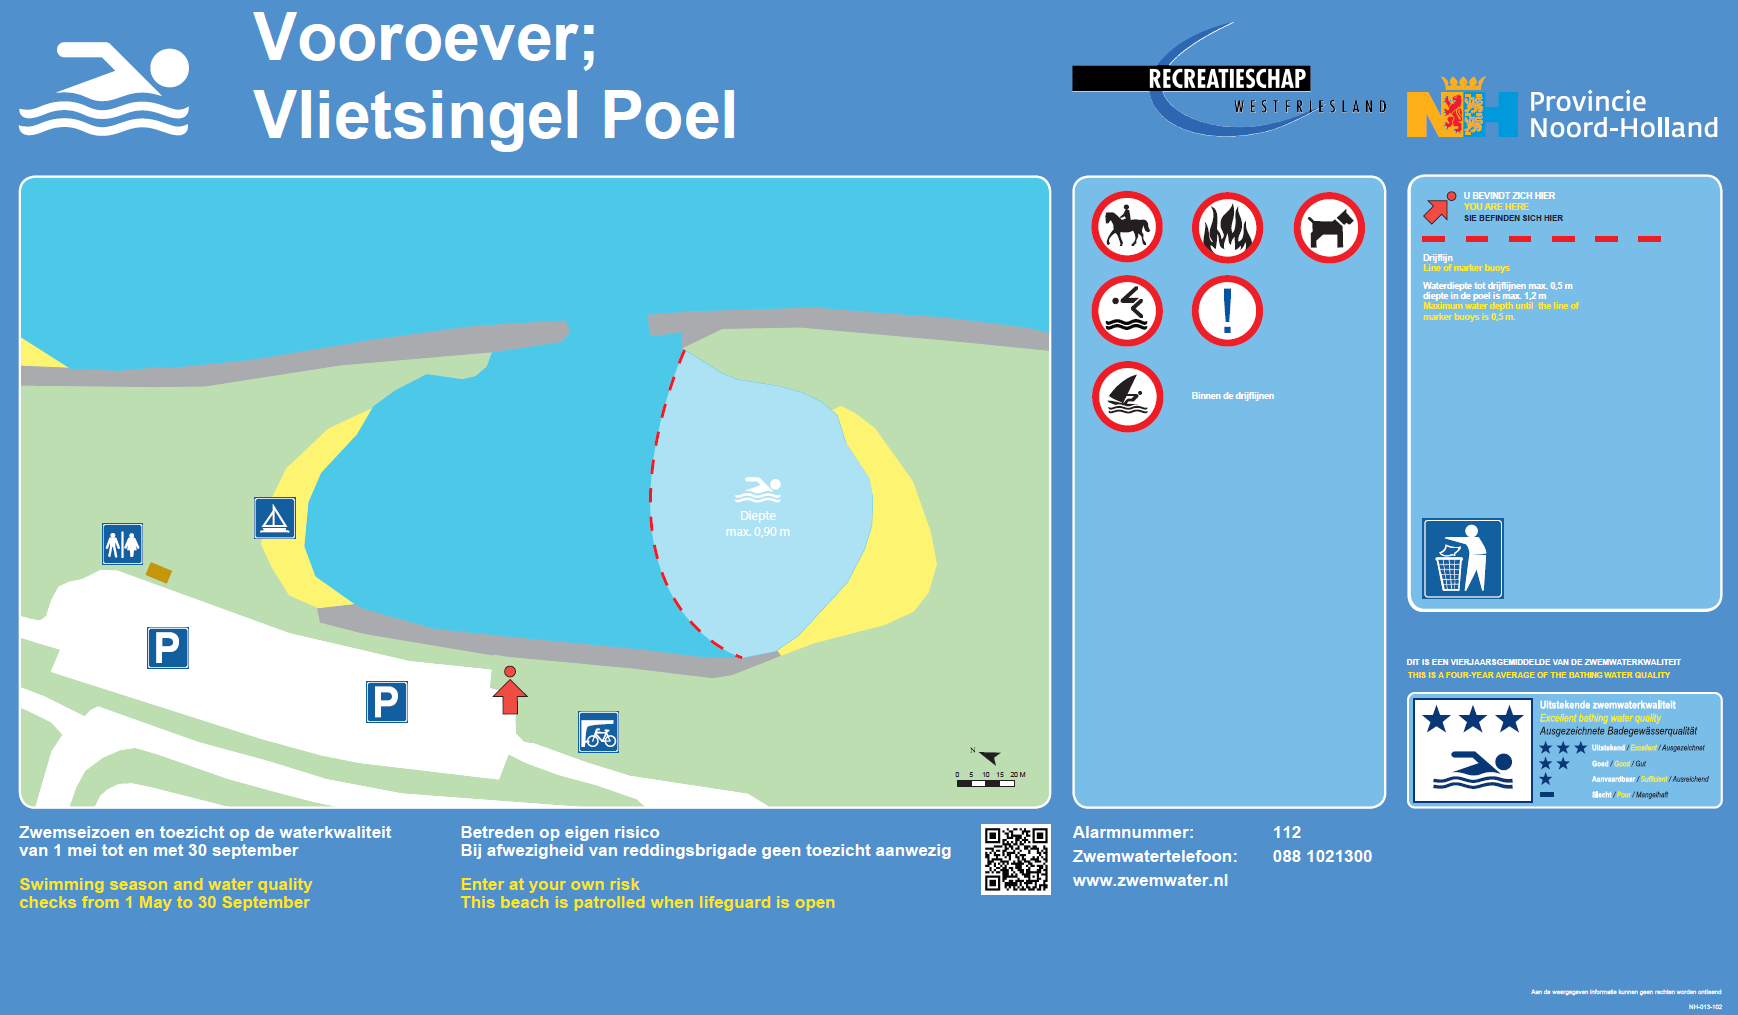 The information board at the swimming location Vooroever; Vlietsingel Poel